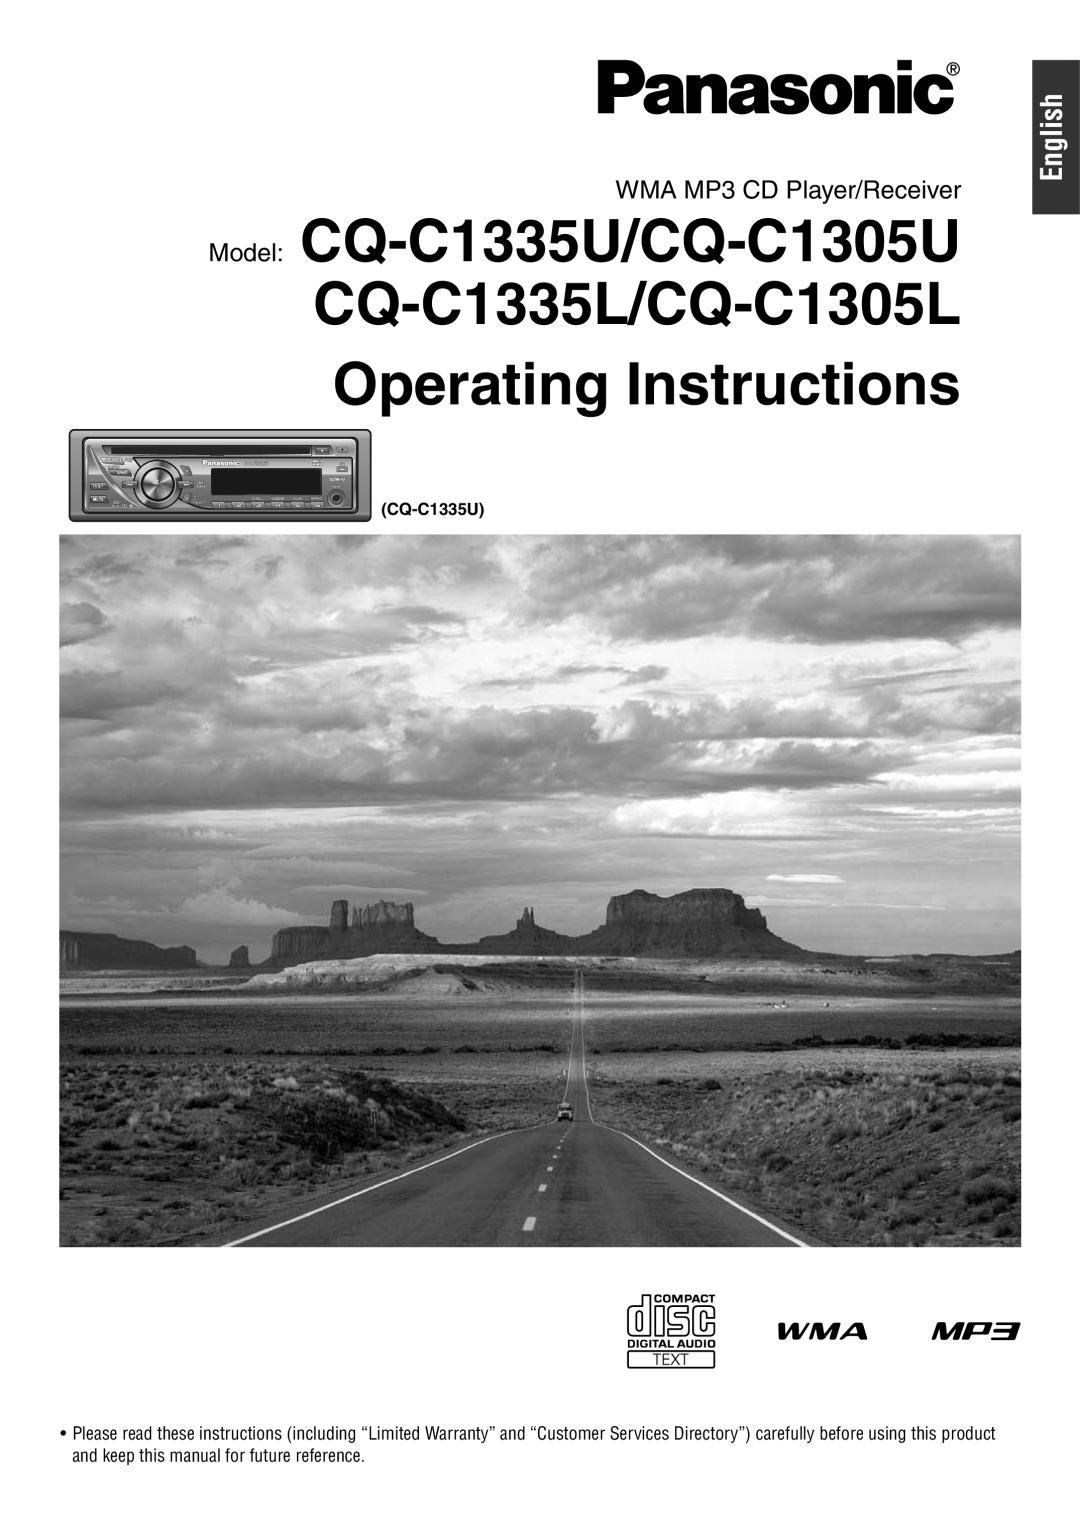 Panasonic operating instructions Model CQ-C1335U/CQ-C1305U CQ-C1335L/CQ-C1305L Operating Instructions, English 